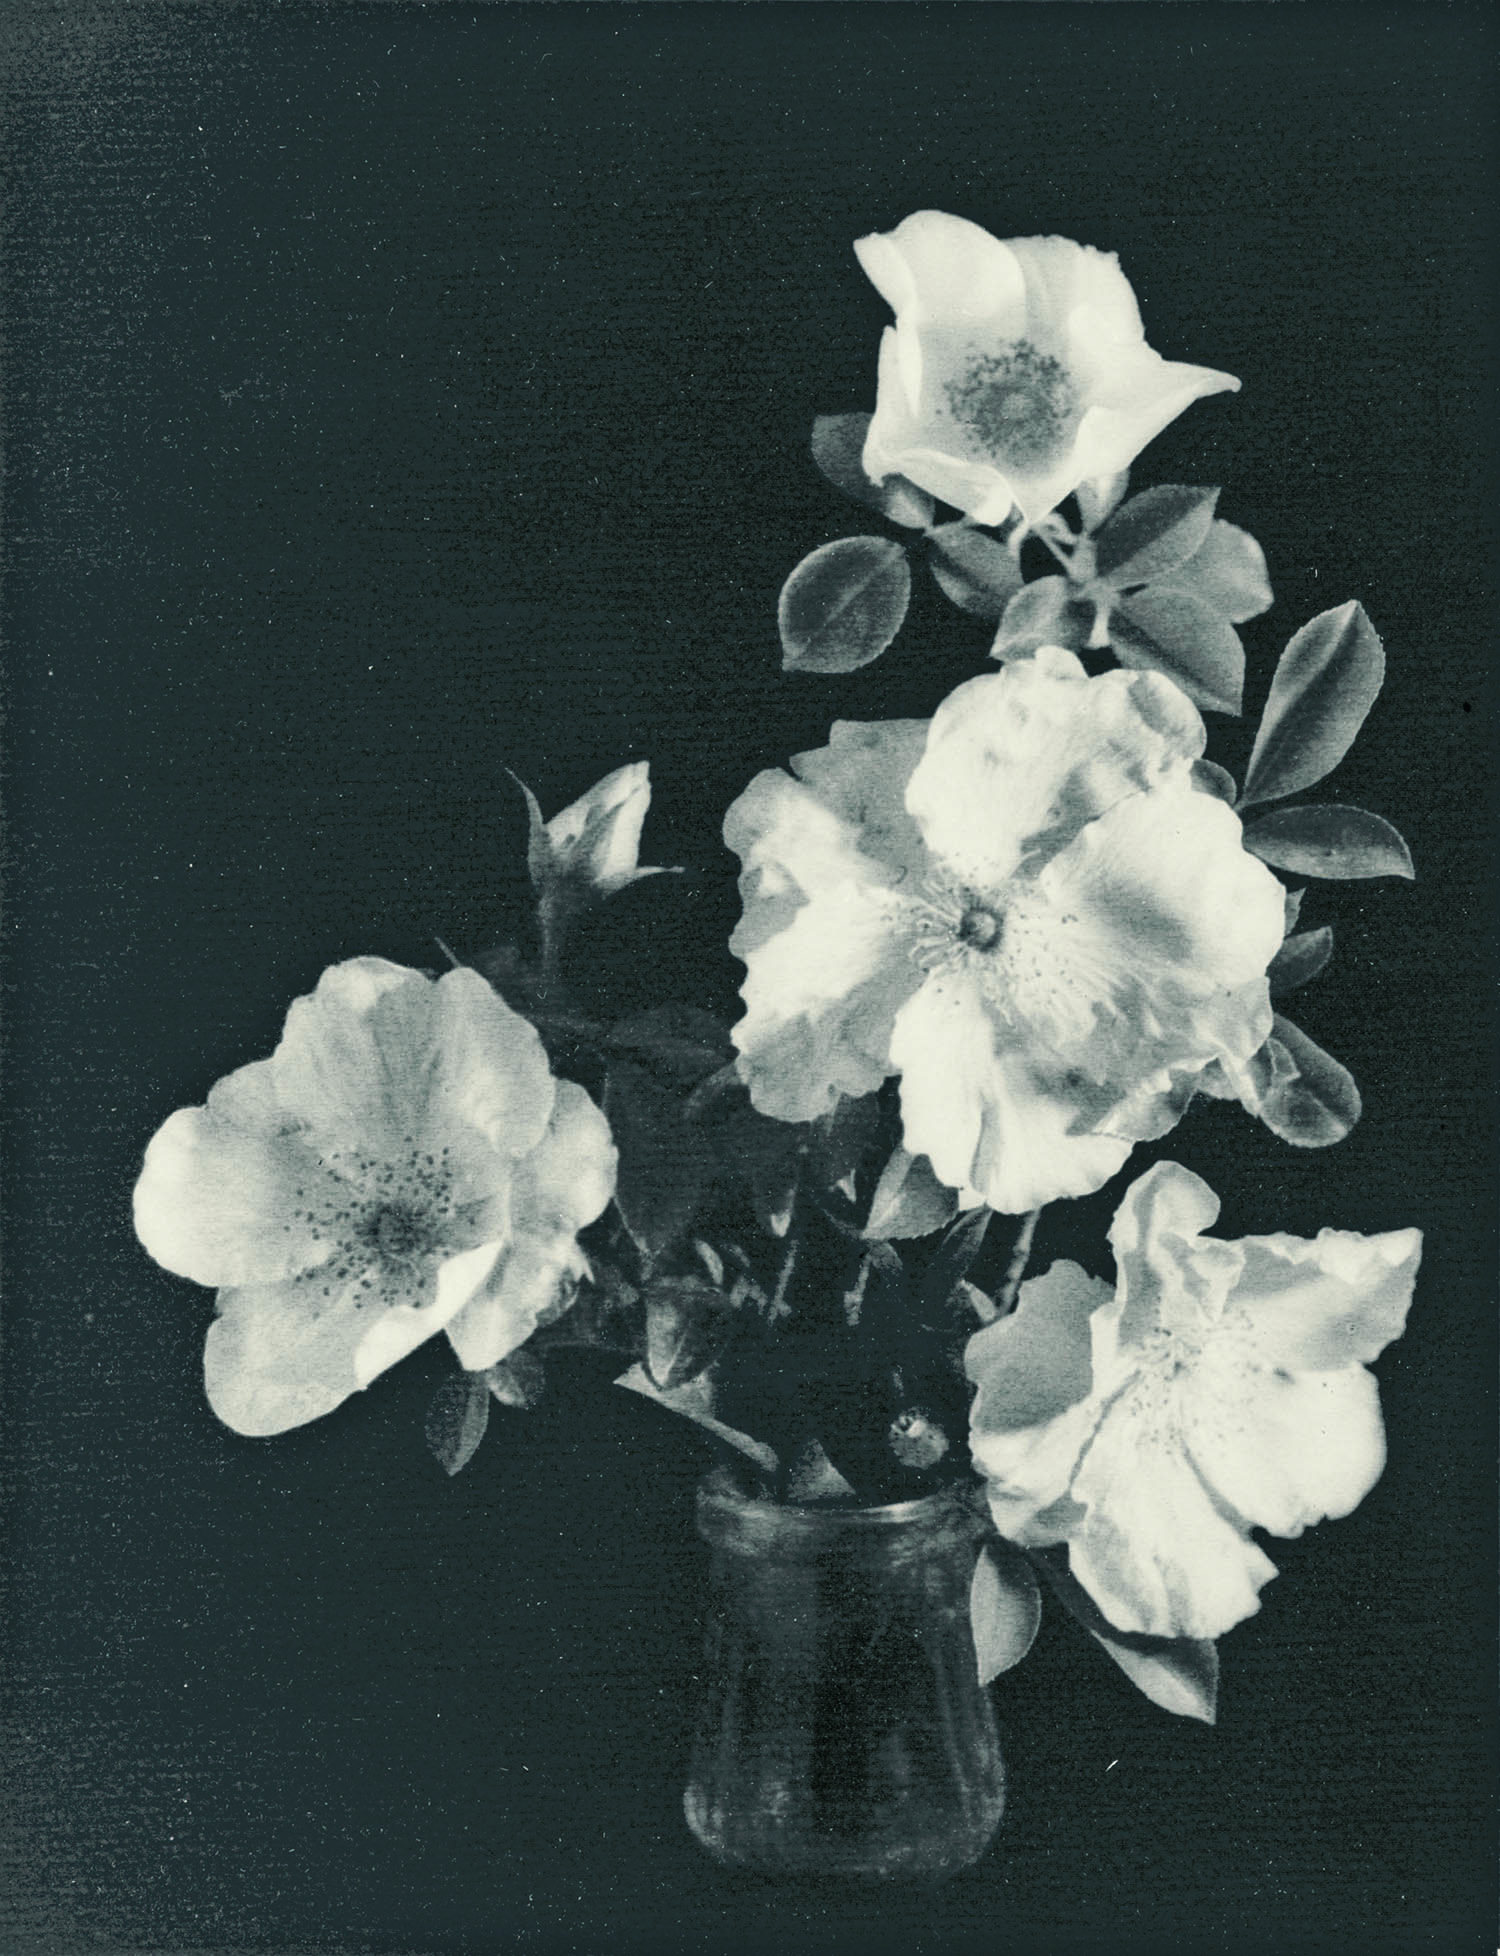  John MacAskill,&nbsp;Australia, 1890/91 ‑ 1974,&nbsp; Roses,&nbsp; c.1927, Australia,&nbsp;gelatin‑silver photograph,&nbsp;36.2 x 28.0 cm (image &amp; sheet).&nbsp;Purchased 1927,&nbsp;Art Gallery of South Australia, Adelaide.&nbsp;2711Ph6 